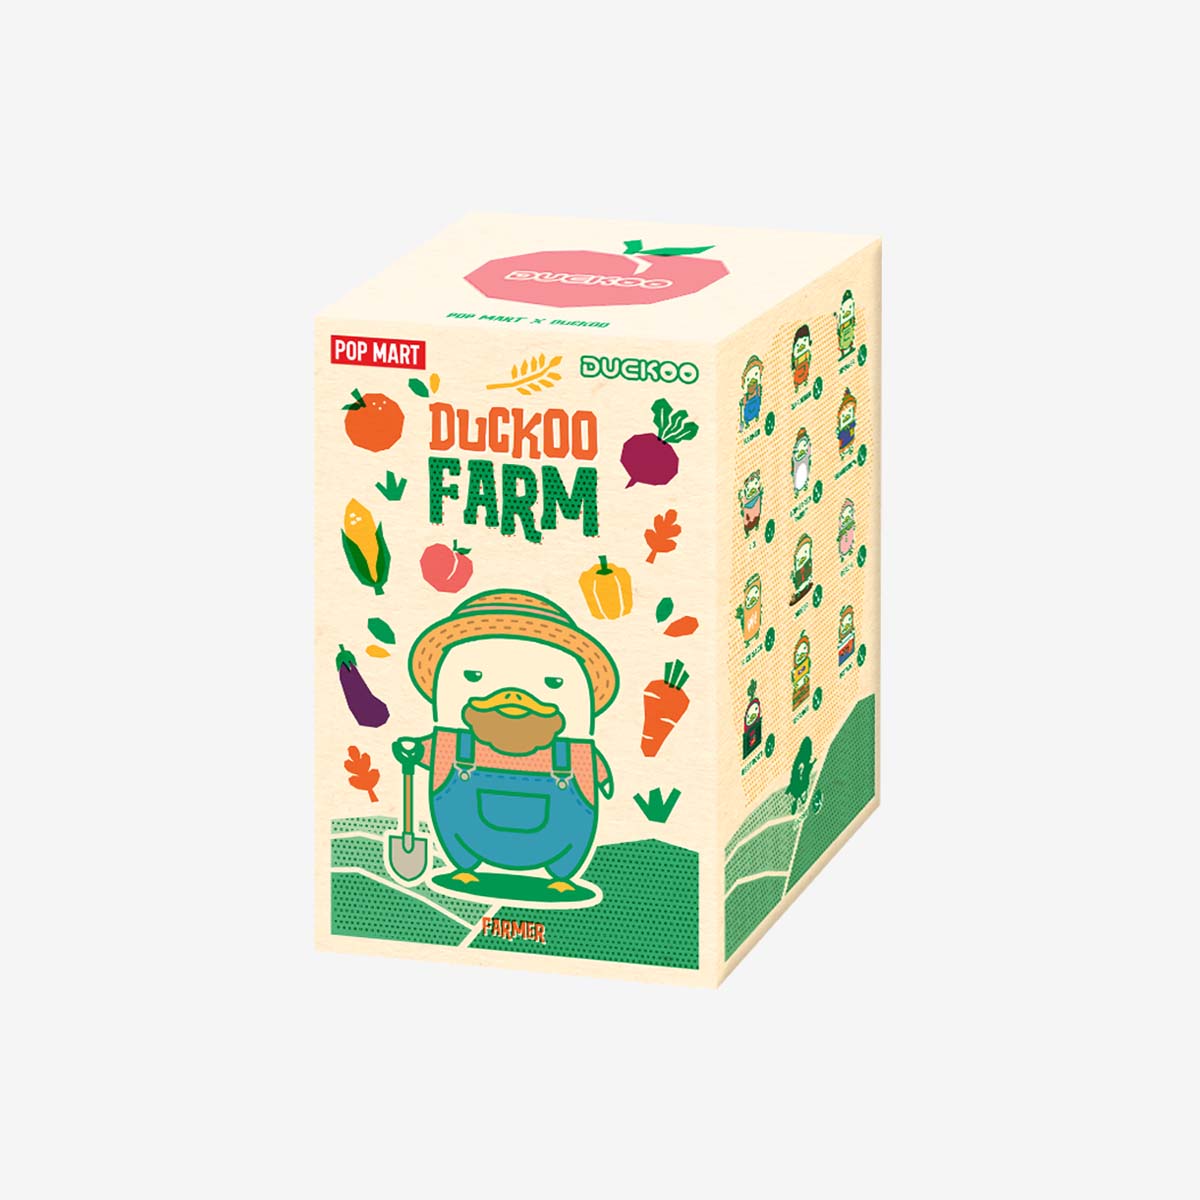 【New】Pop Mart DUCKOO FARM Series Blind Box Figures